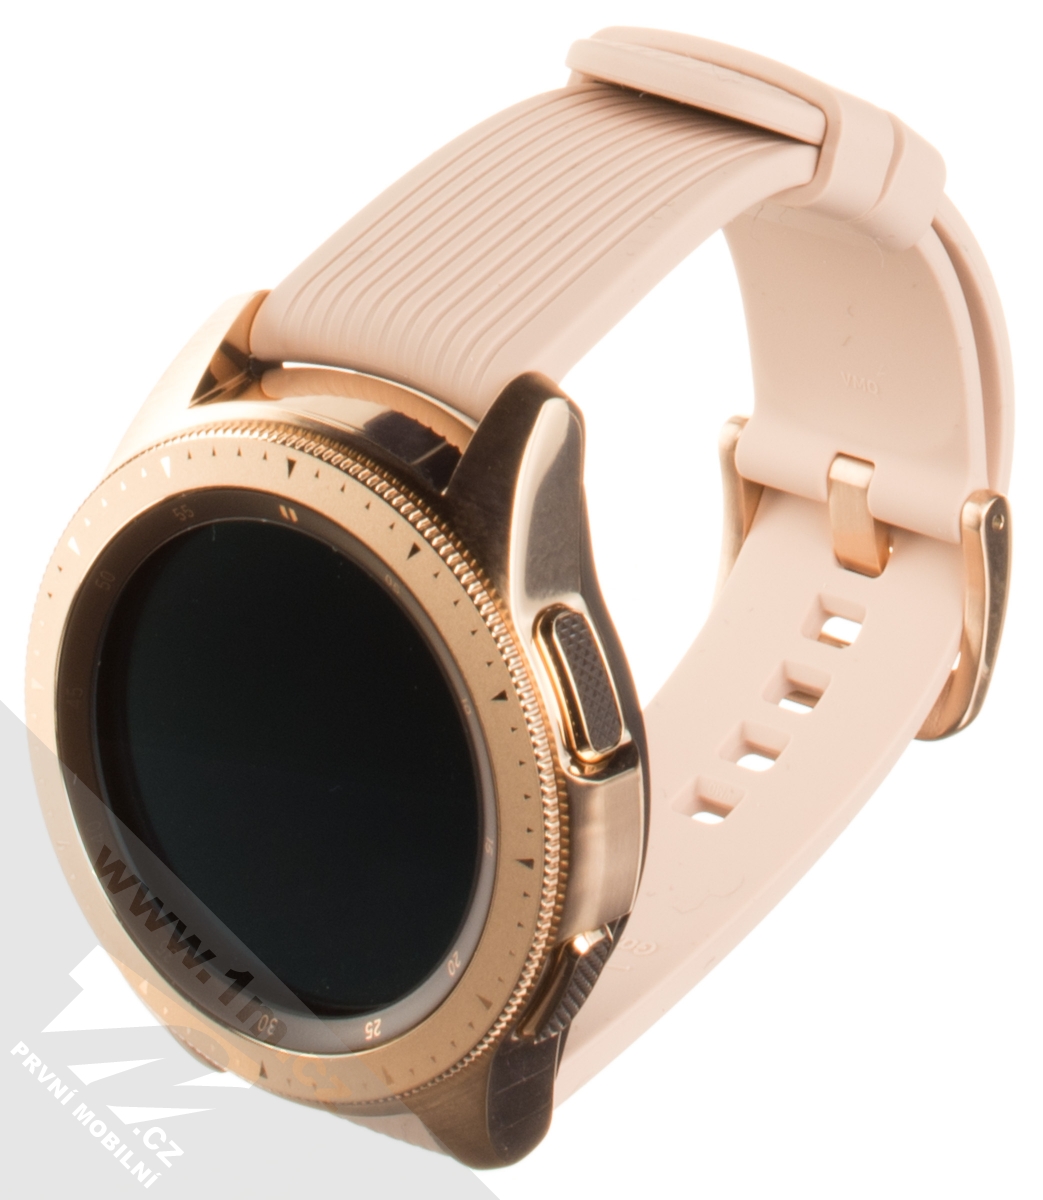 Samsung galaxy watch золото. Samsung Galaxy watch 42mm. Часы самсунг Galaxy watch 42mm. Самсунг галакси вотч 42 мм розовое золото. Samsung Galaxy watch 42mm Rose.